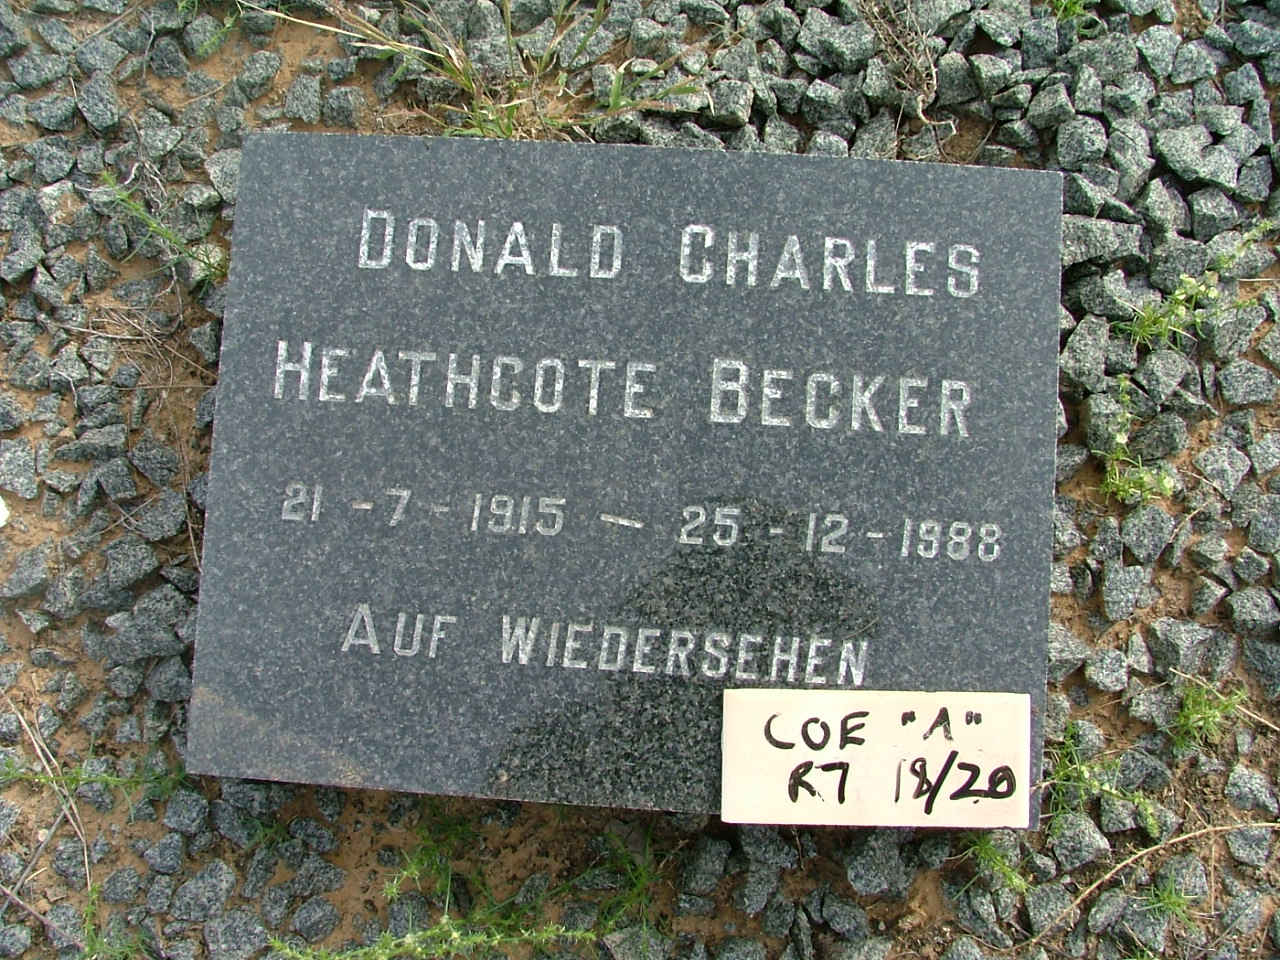 BECKER Donald Charles Heathcote 1915-1988